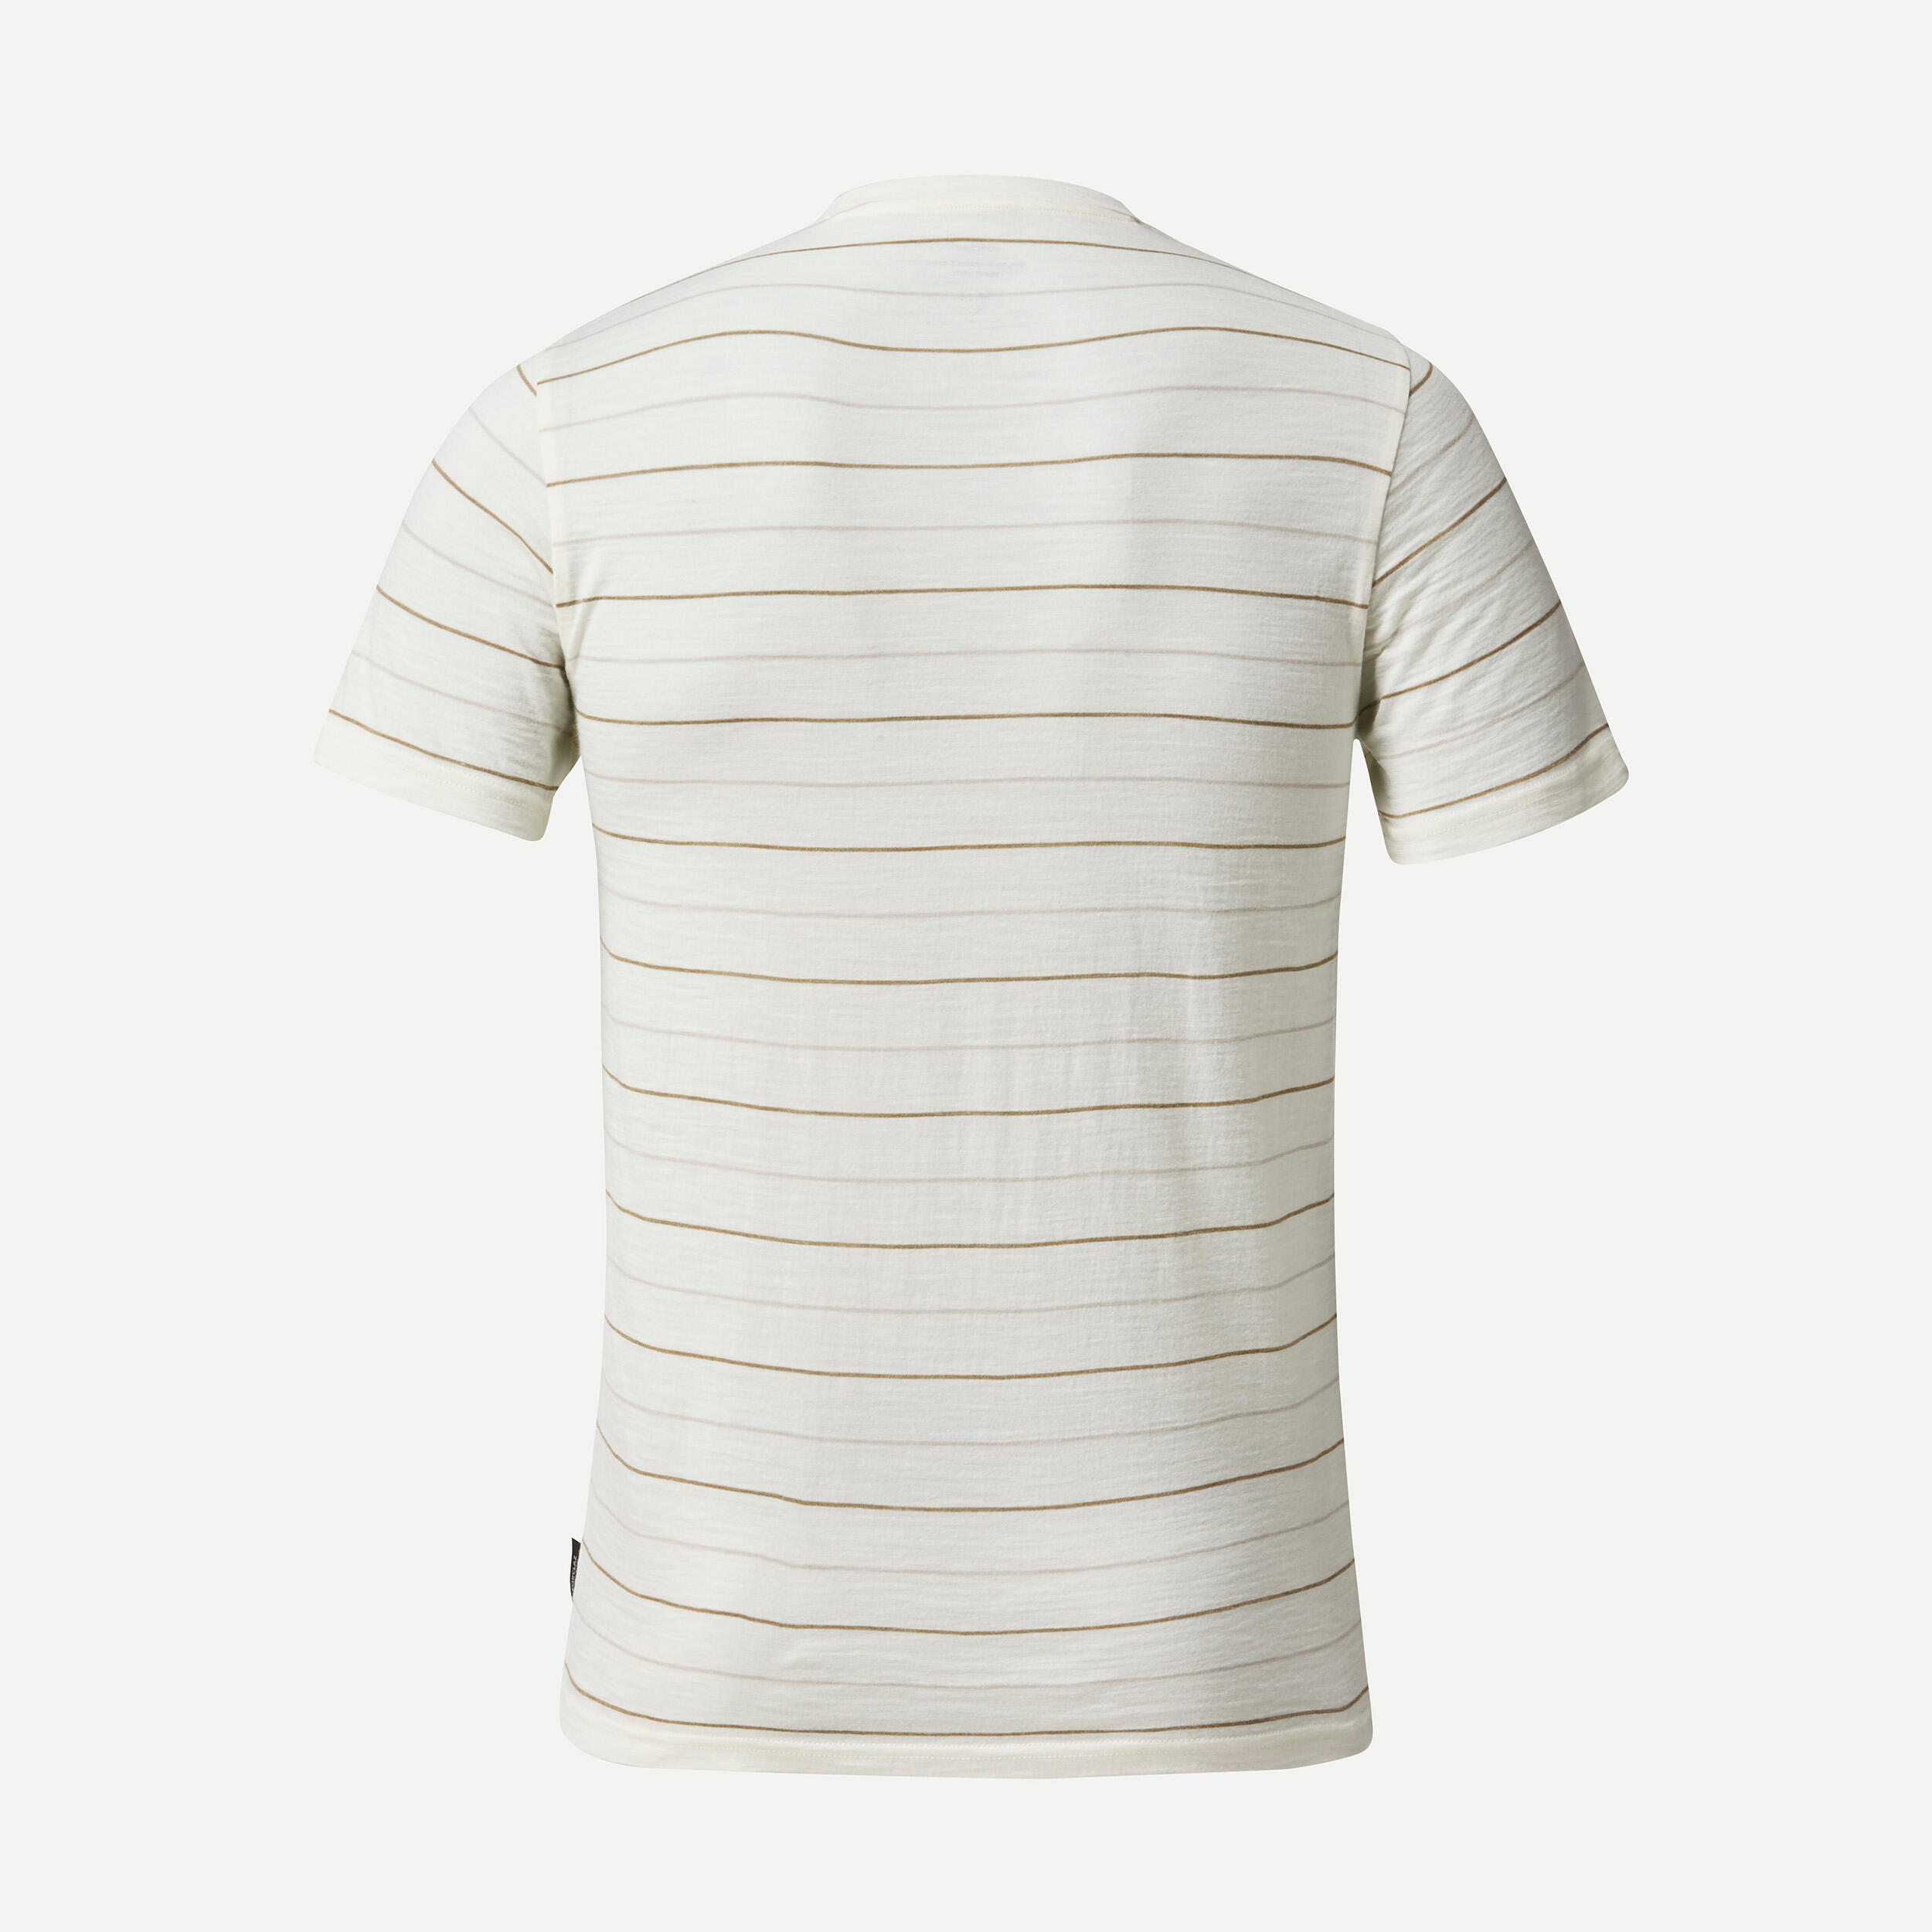 Men’s short-sleeved Merino wool hiking travel t-shirt - TRAVEL 500 white 6/6